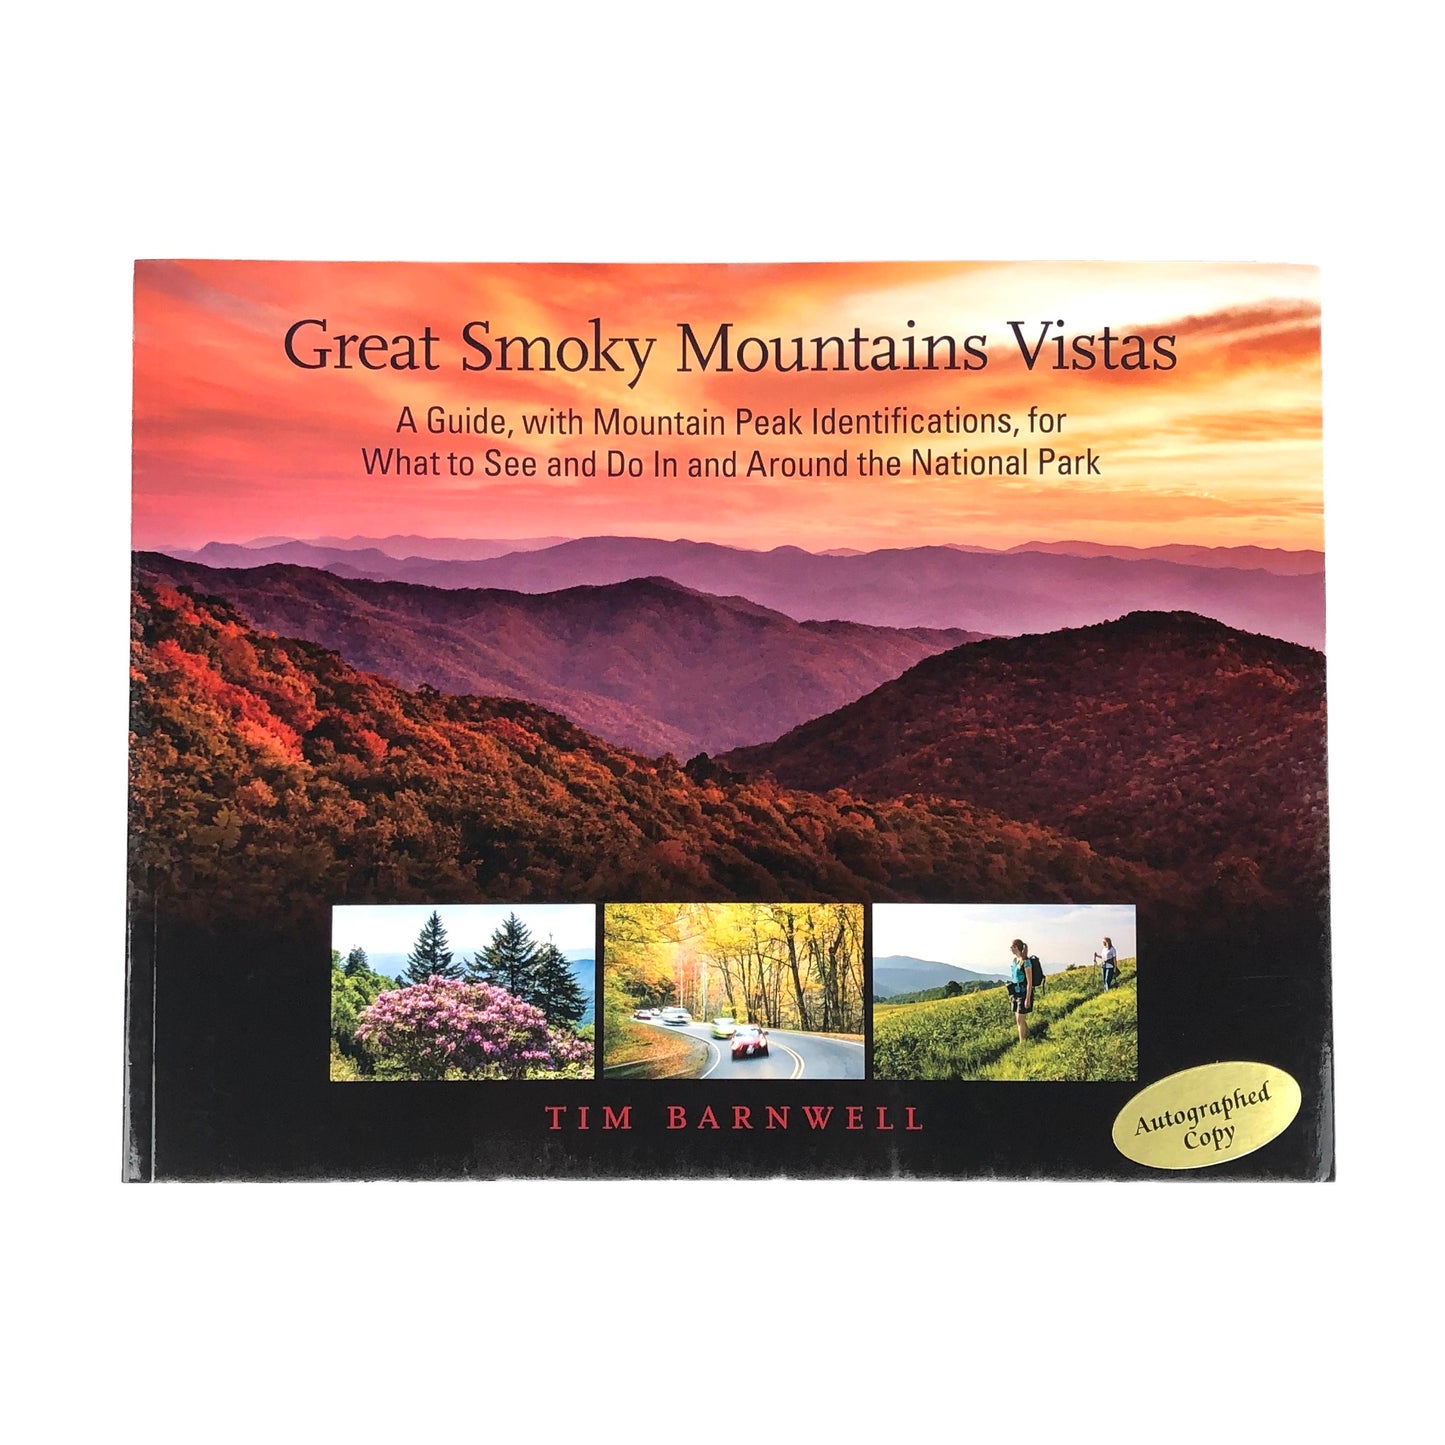 Great Smoky Mountains Vistas